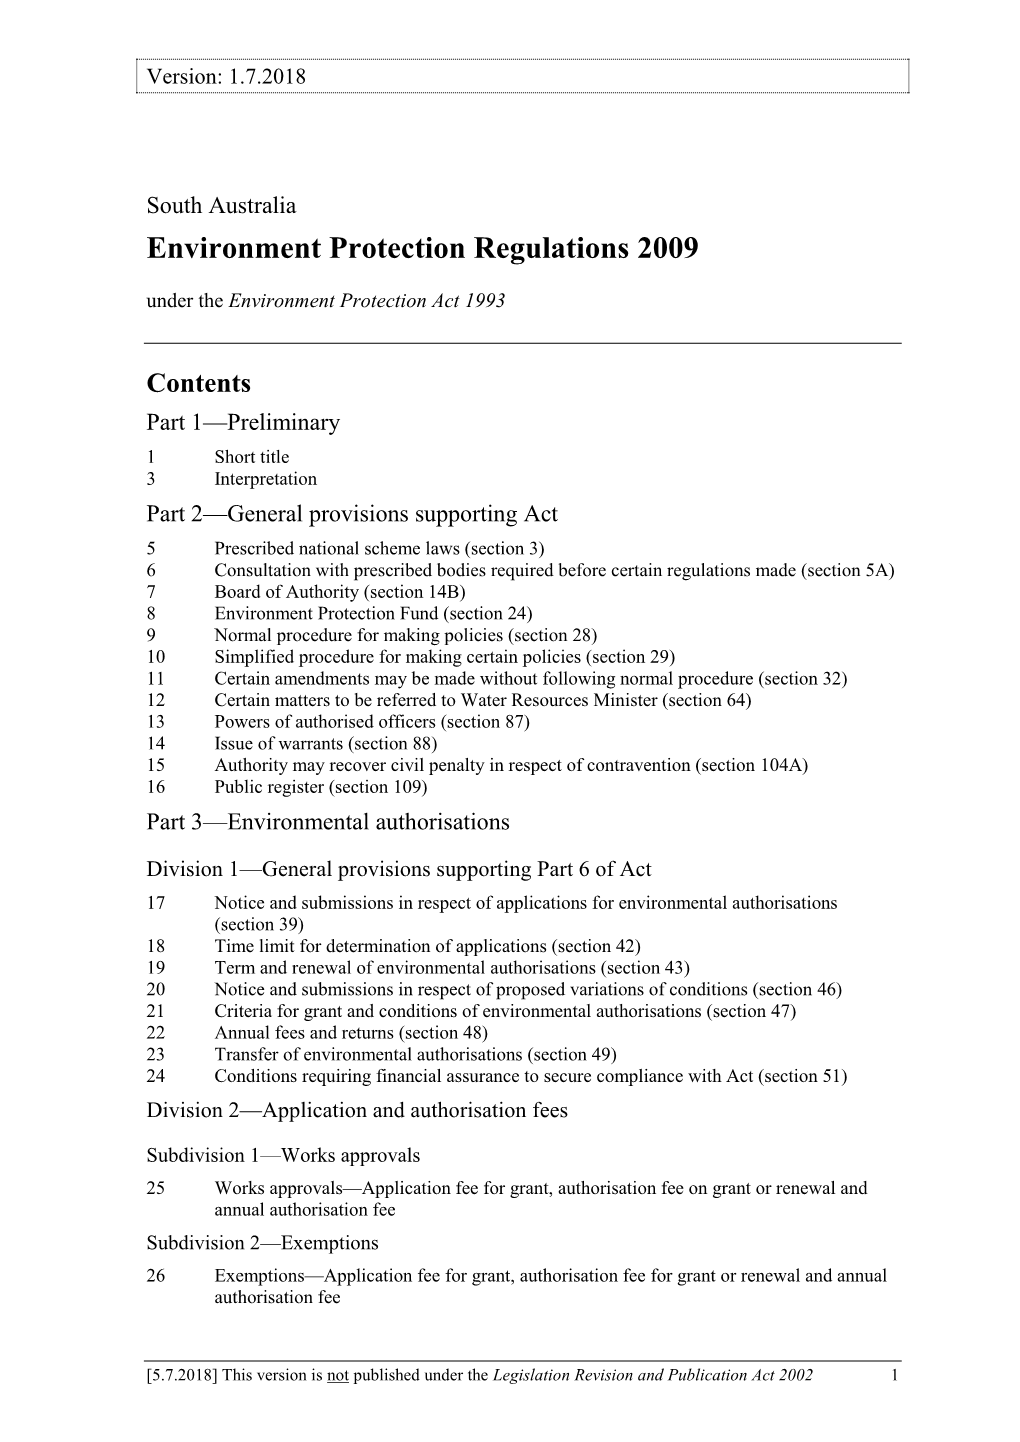 South Australia Environment Protection Regulations 2009 Under the Environment Protection Act 1993